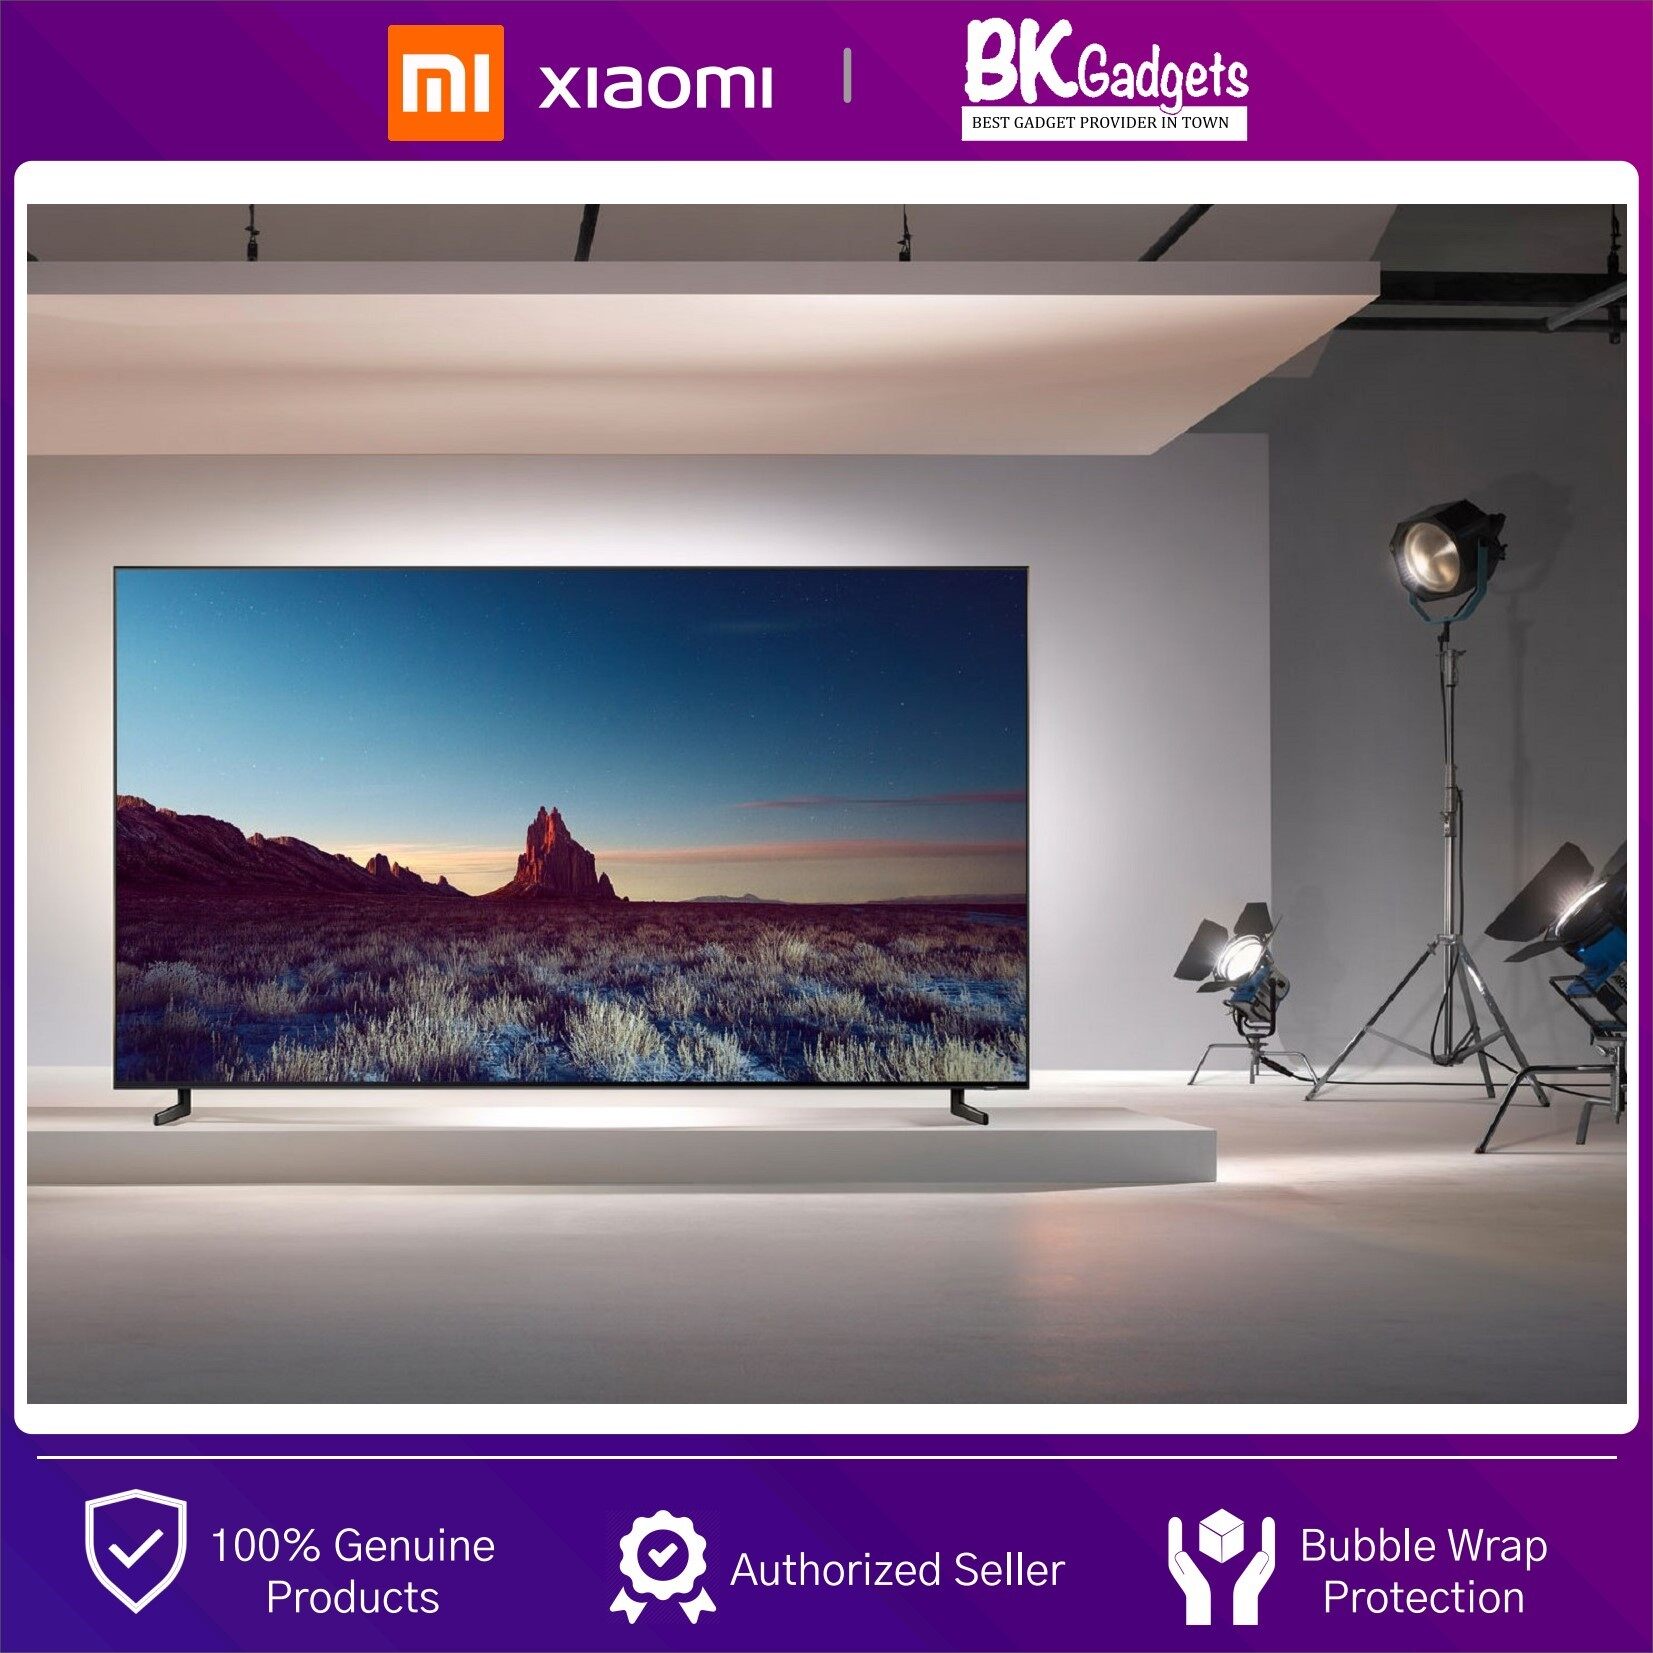 XiaoMi Redmi LED Smart TV Max 98" Giant Screen 4K Ultra HD - MEMC Motion Compensation | 192 Zone Dynamic Backlight | Large Cavity Four-unit Speaker | Chinese Version | 1 Year Warranty